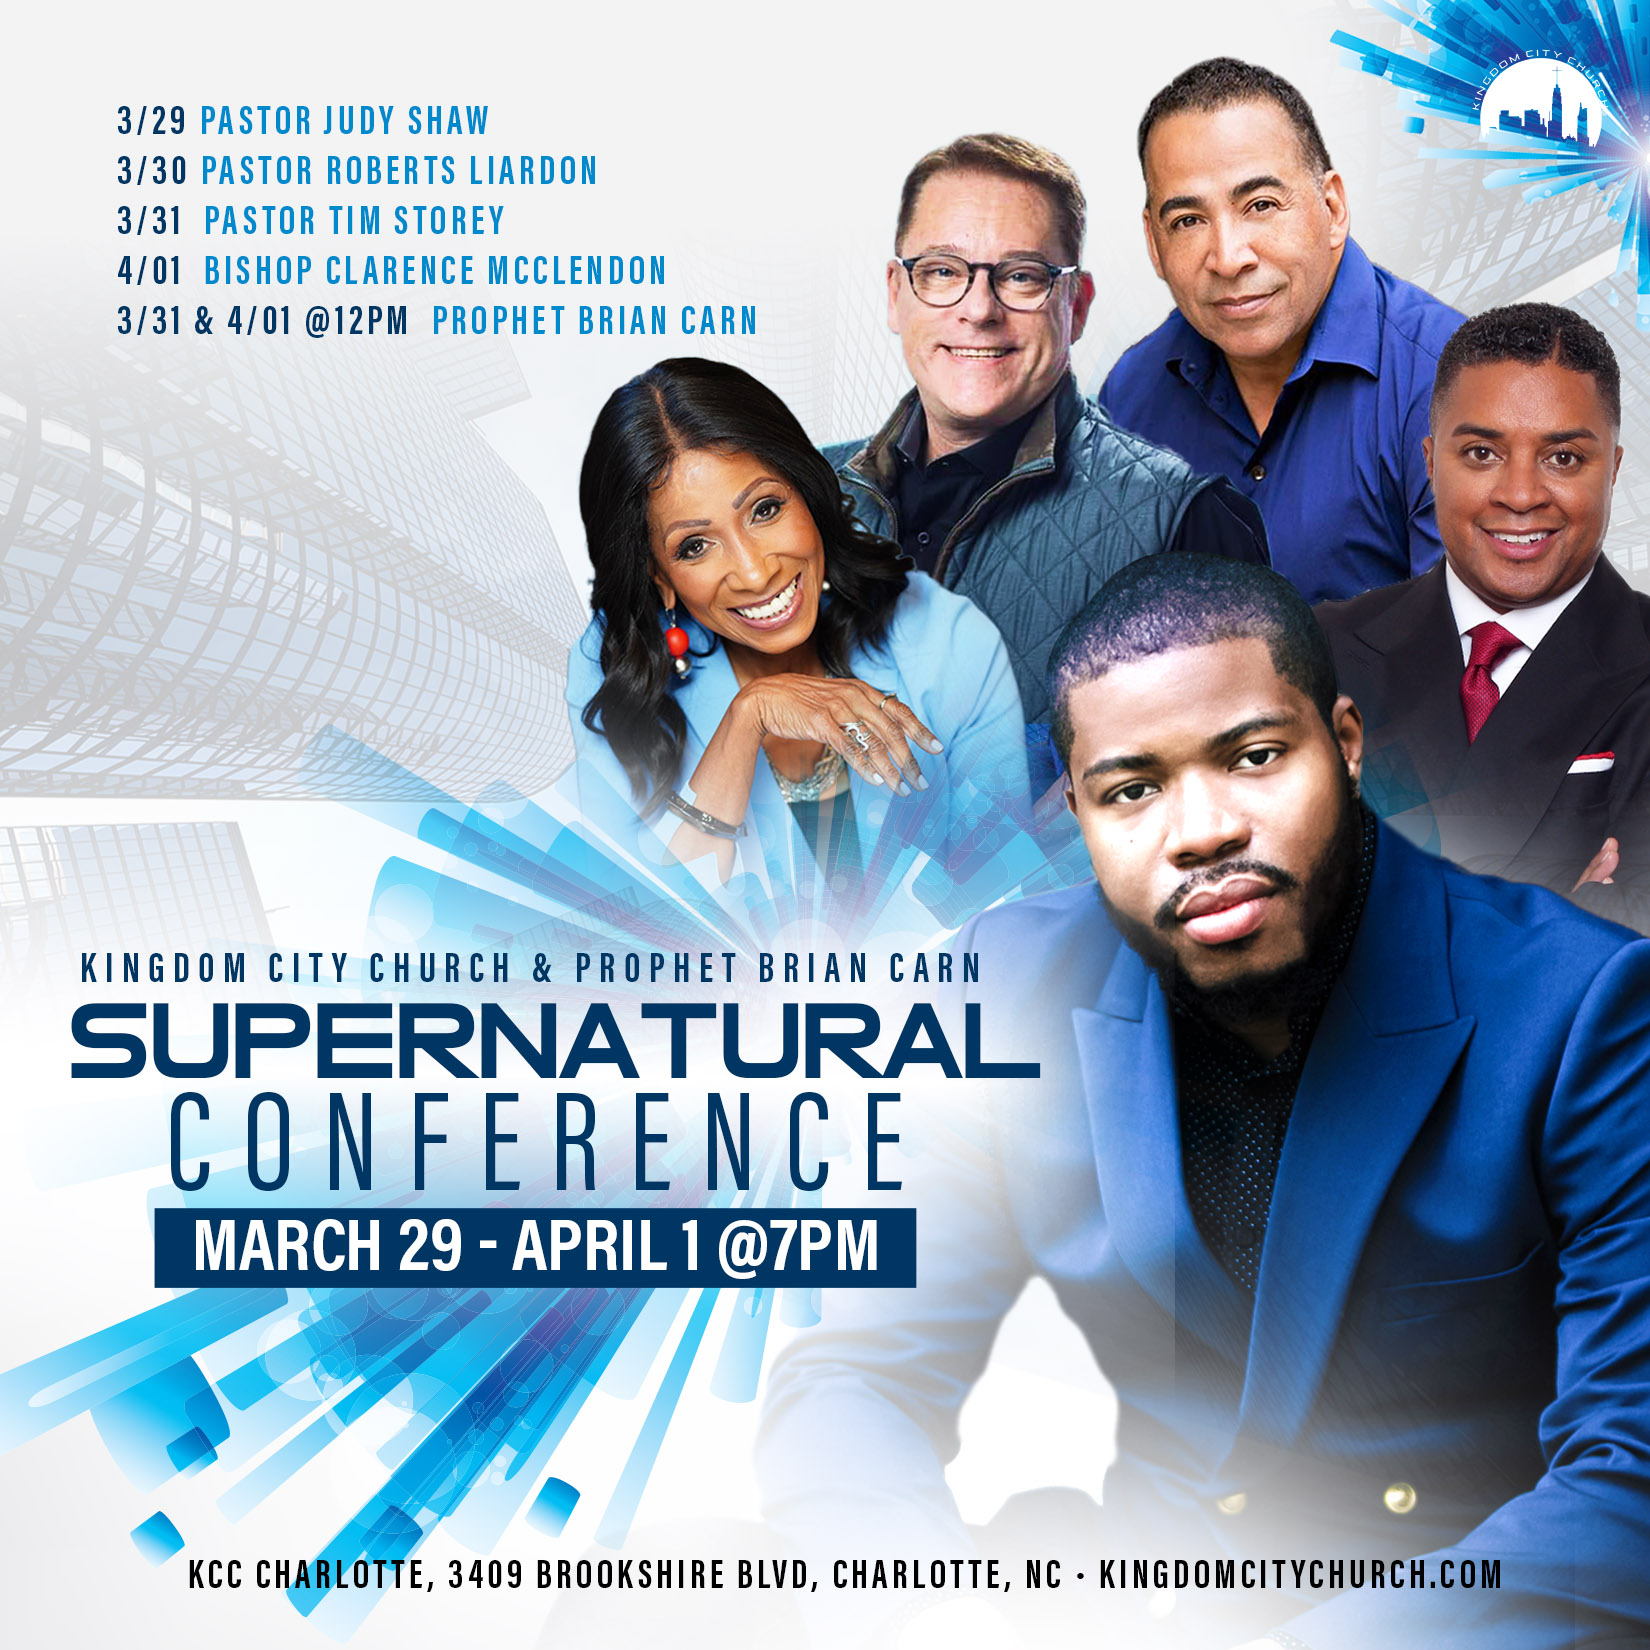 KCC Supernatural Conference (Charlotte, NC) Brian Carn Ministries